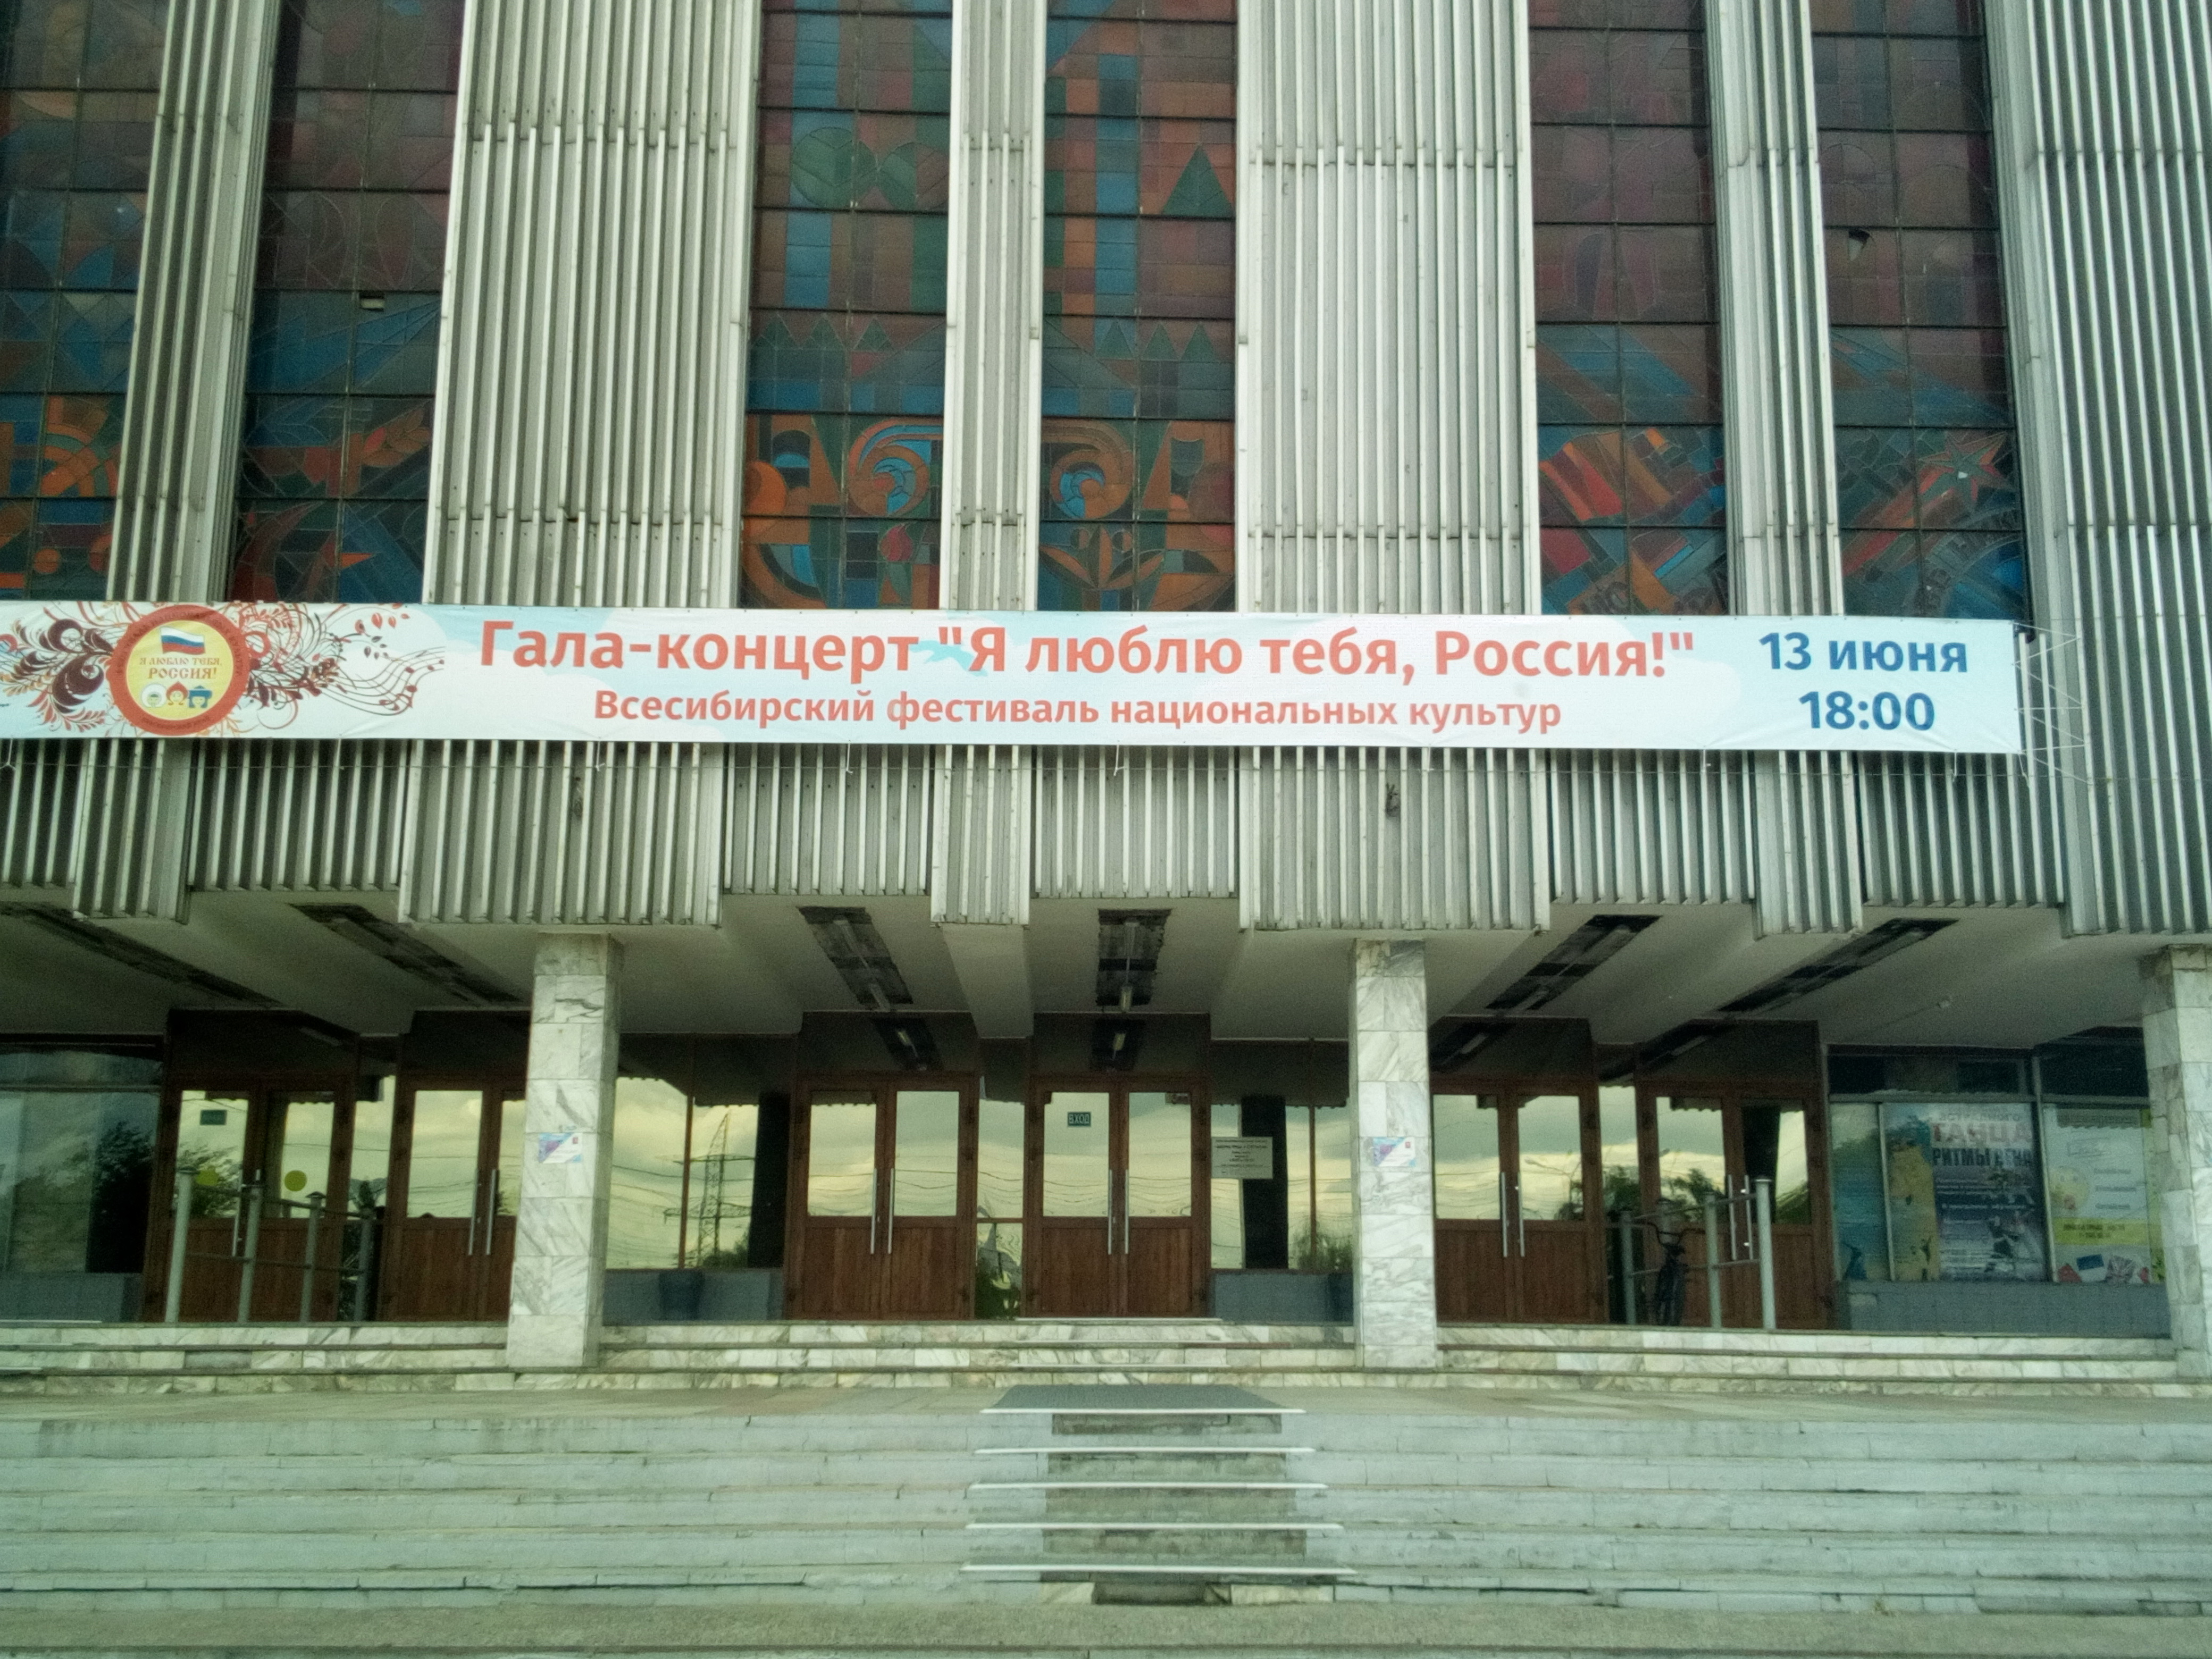 Дворец труда в красноярске фото